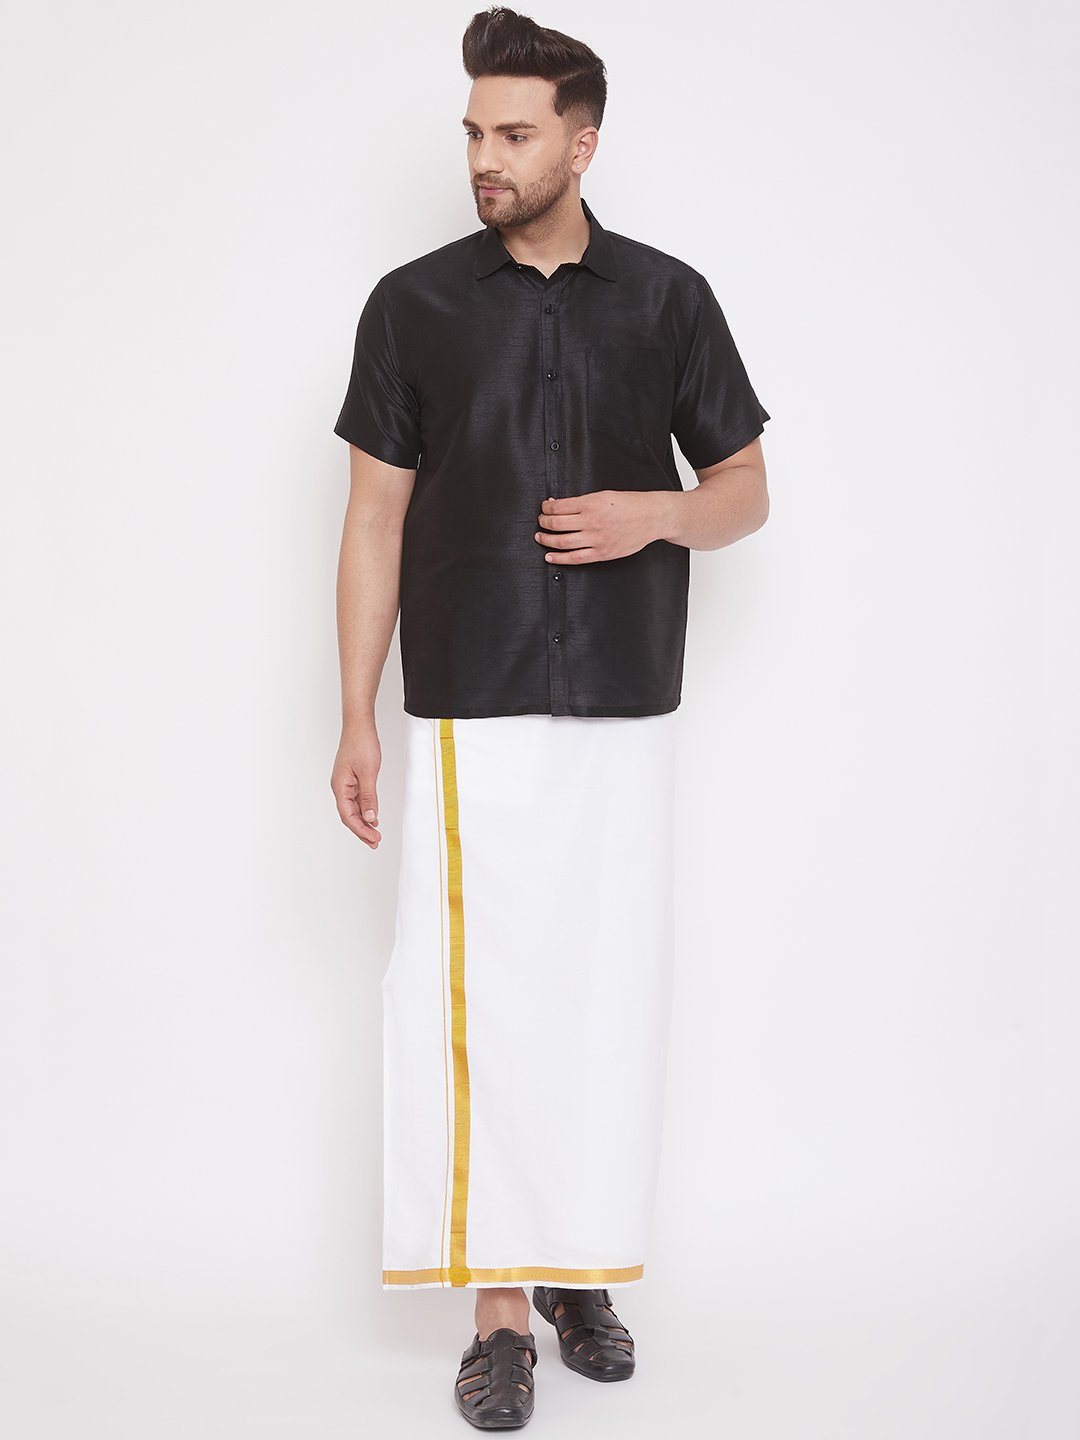 Men's Black Cotton Silk Blend Ethnic Shirt - Vastramay